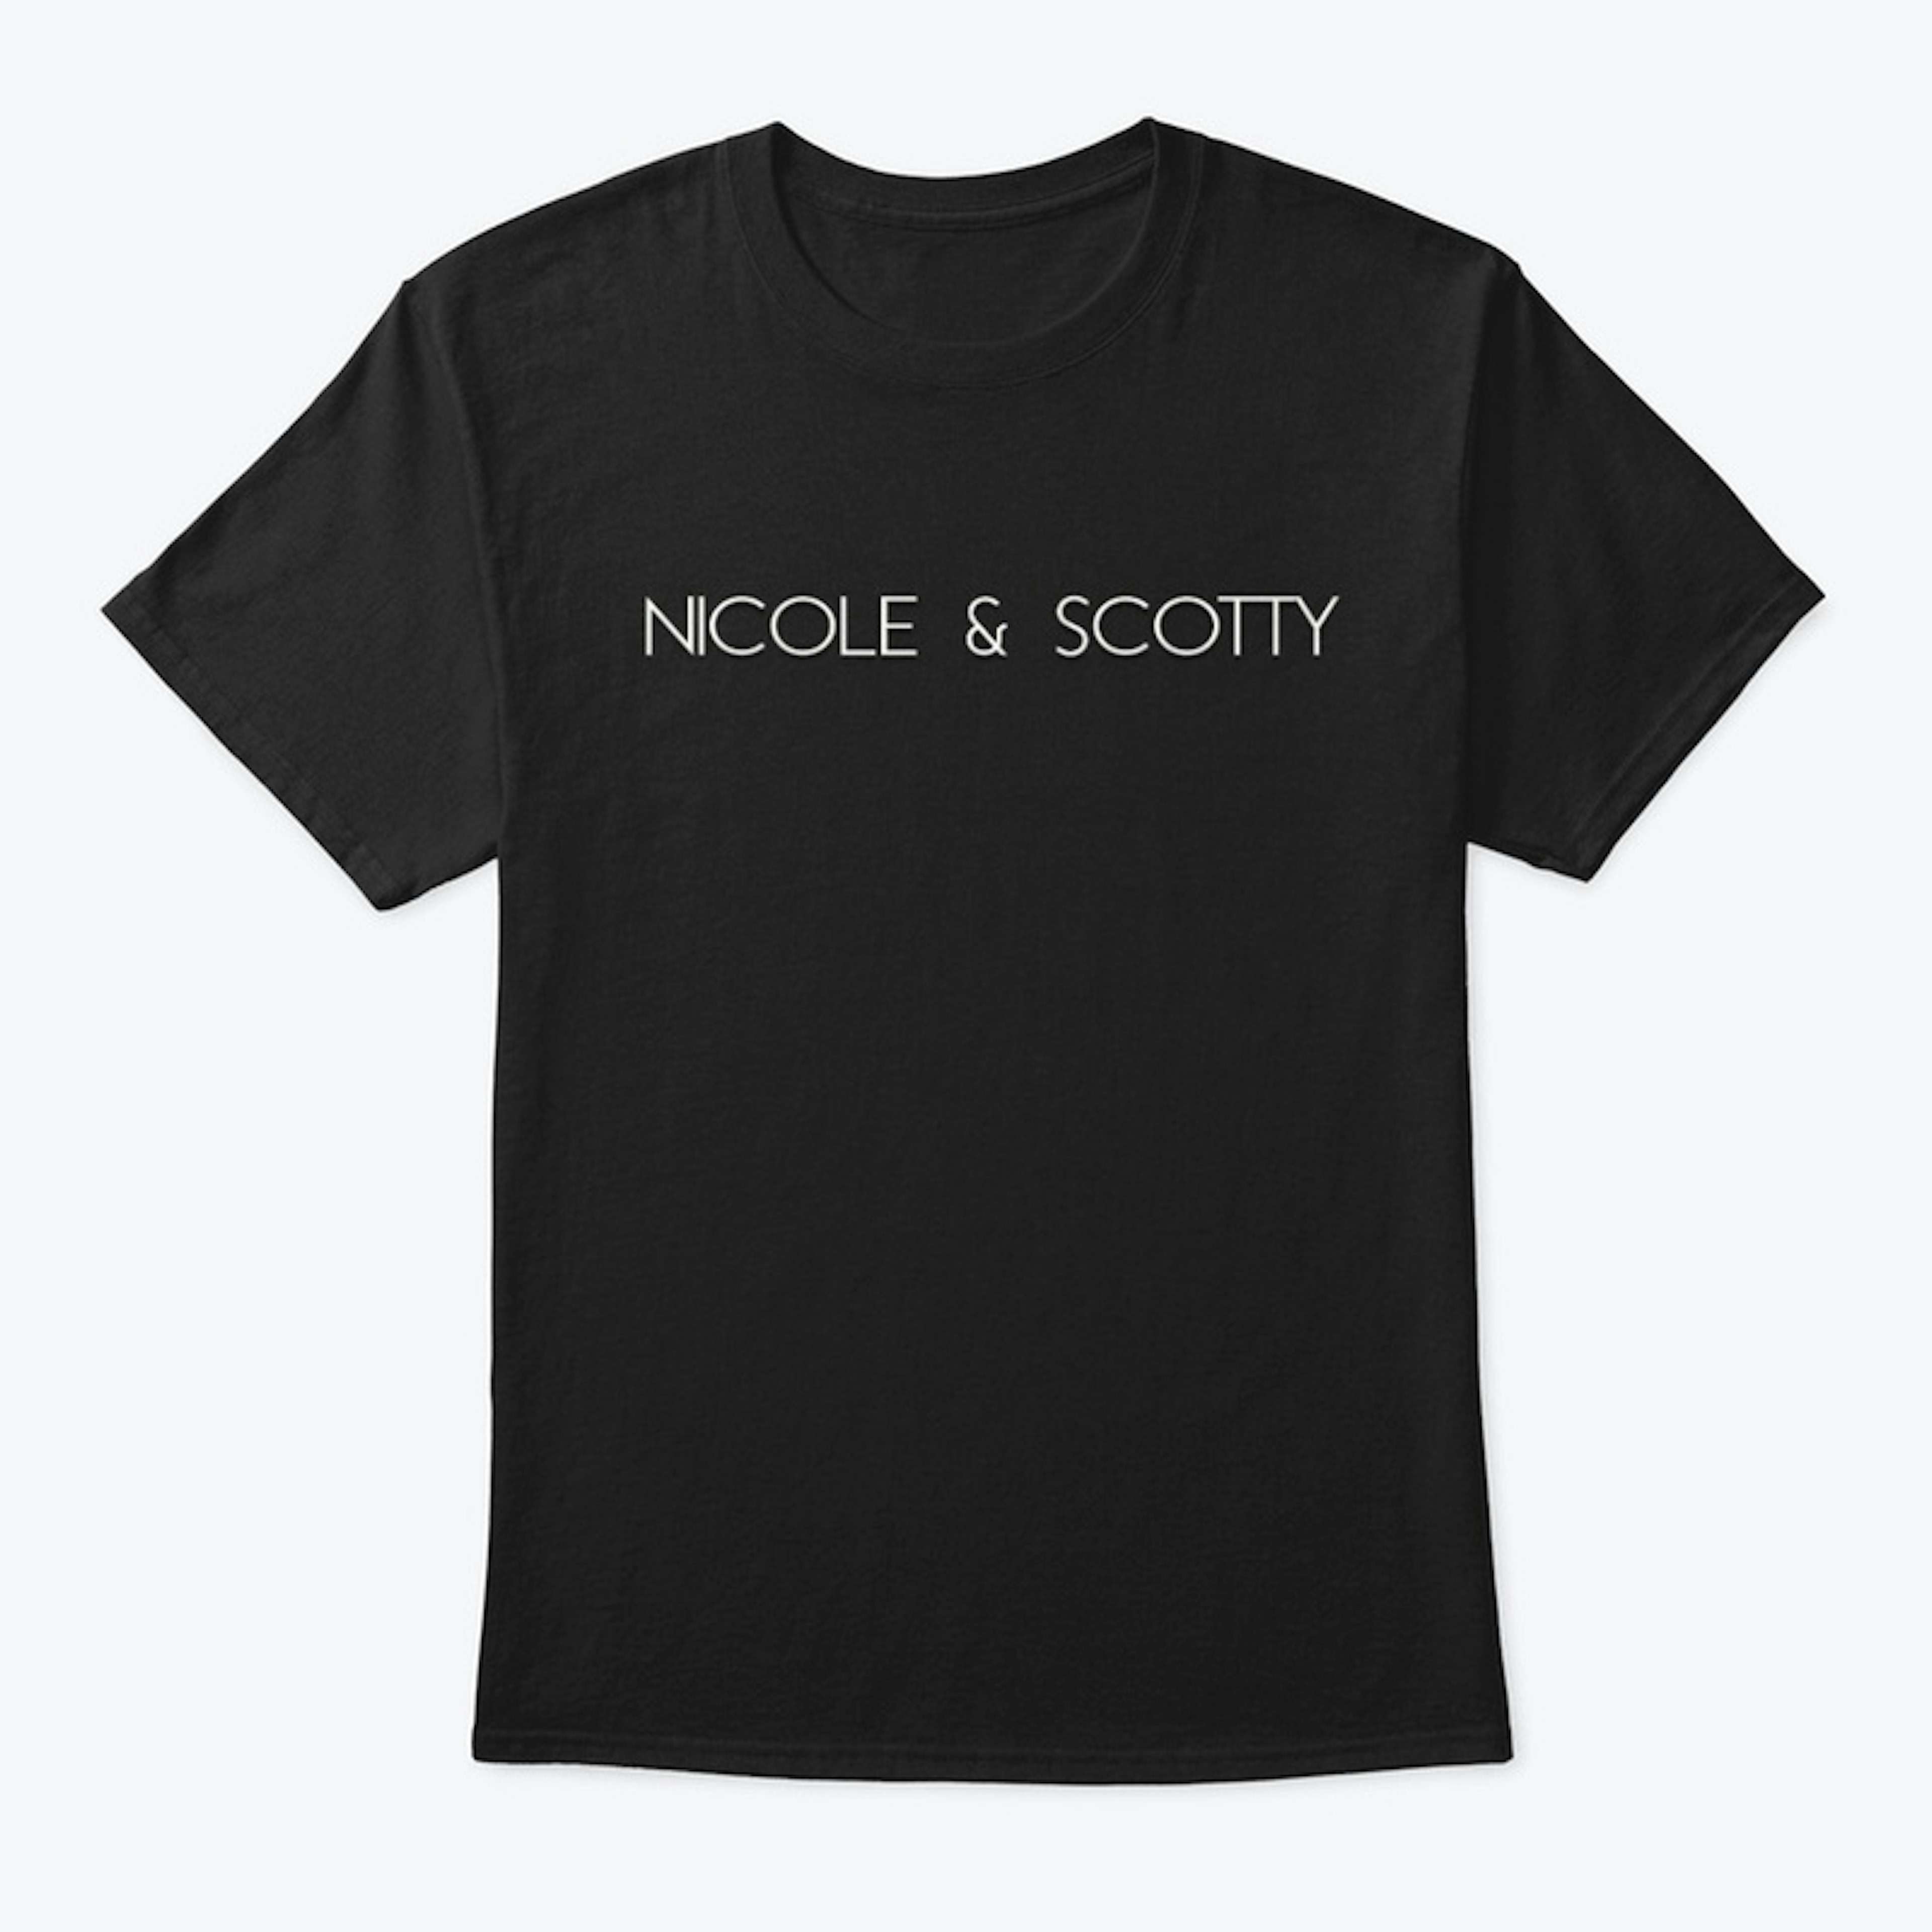 Nicole & Scotty Logo Black Tee